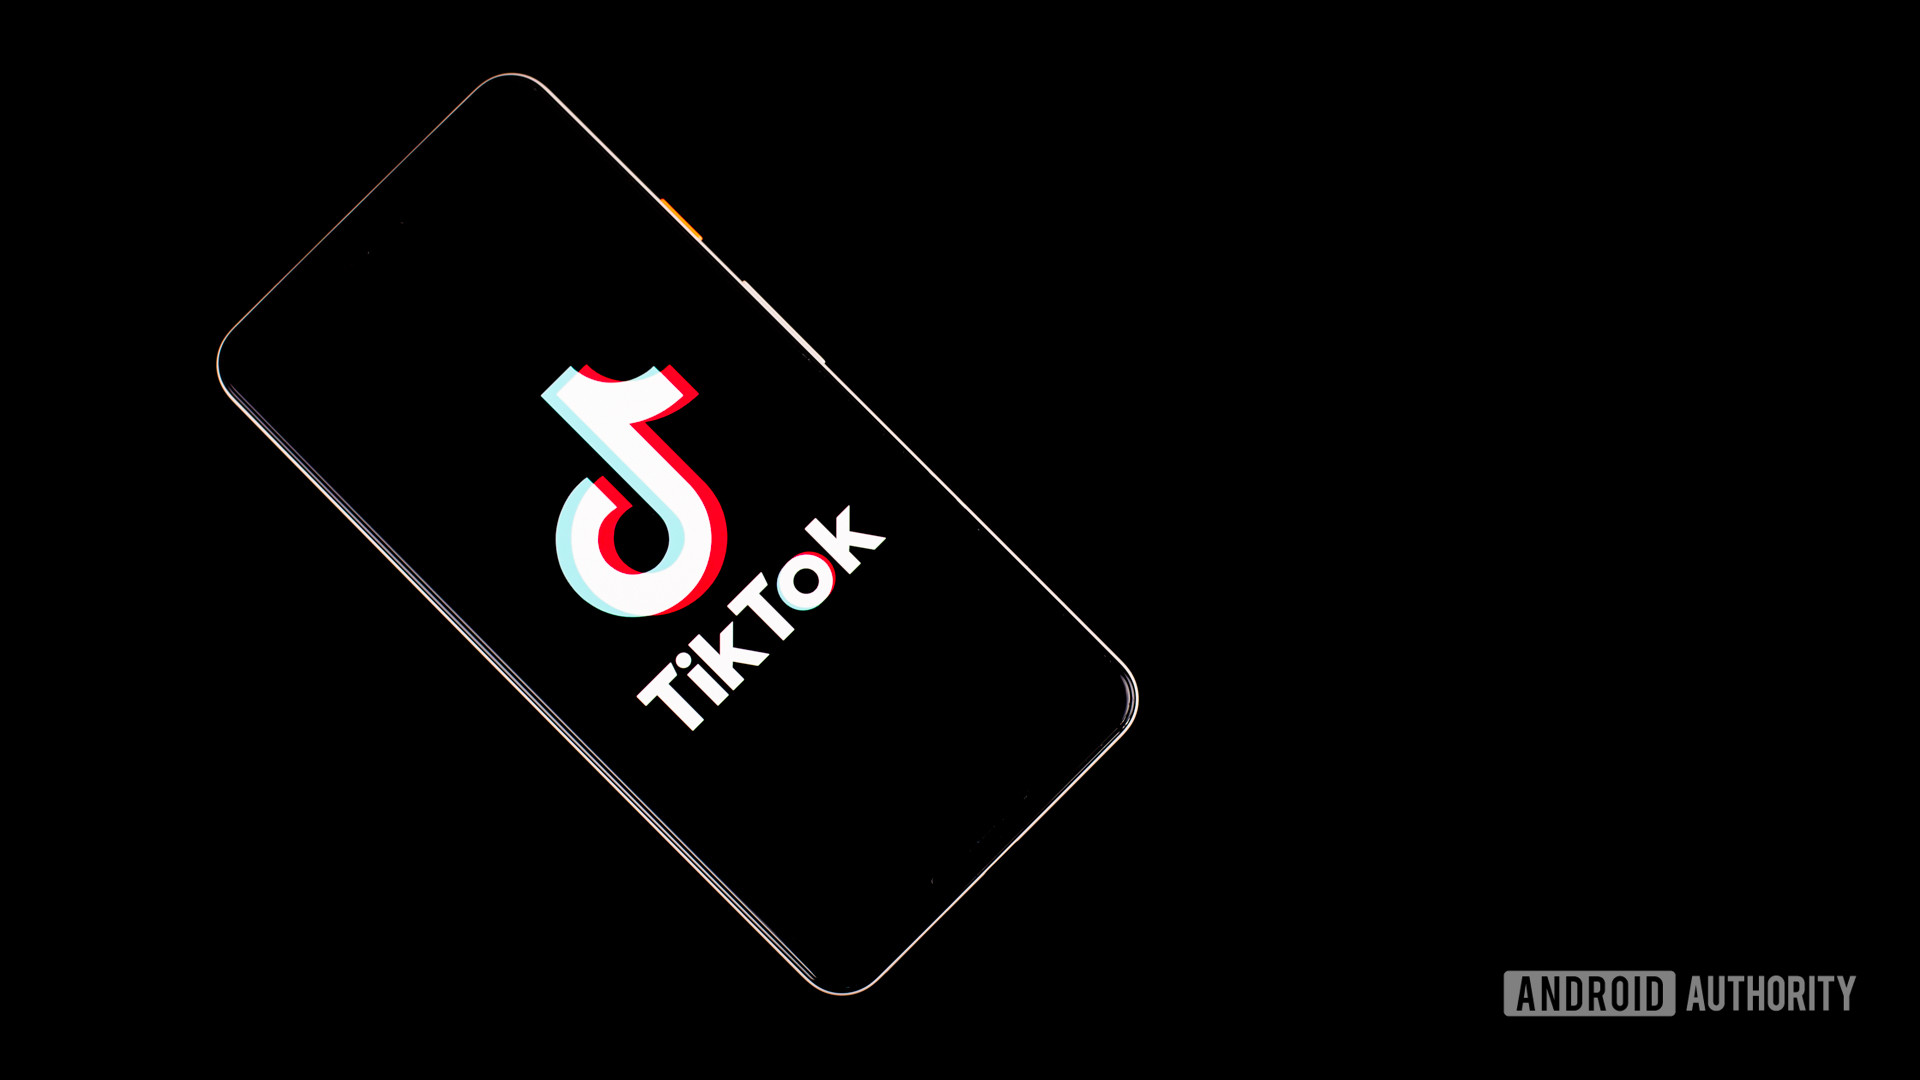 Tiktok stock photo on smartphone - Who owns TikTok?